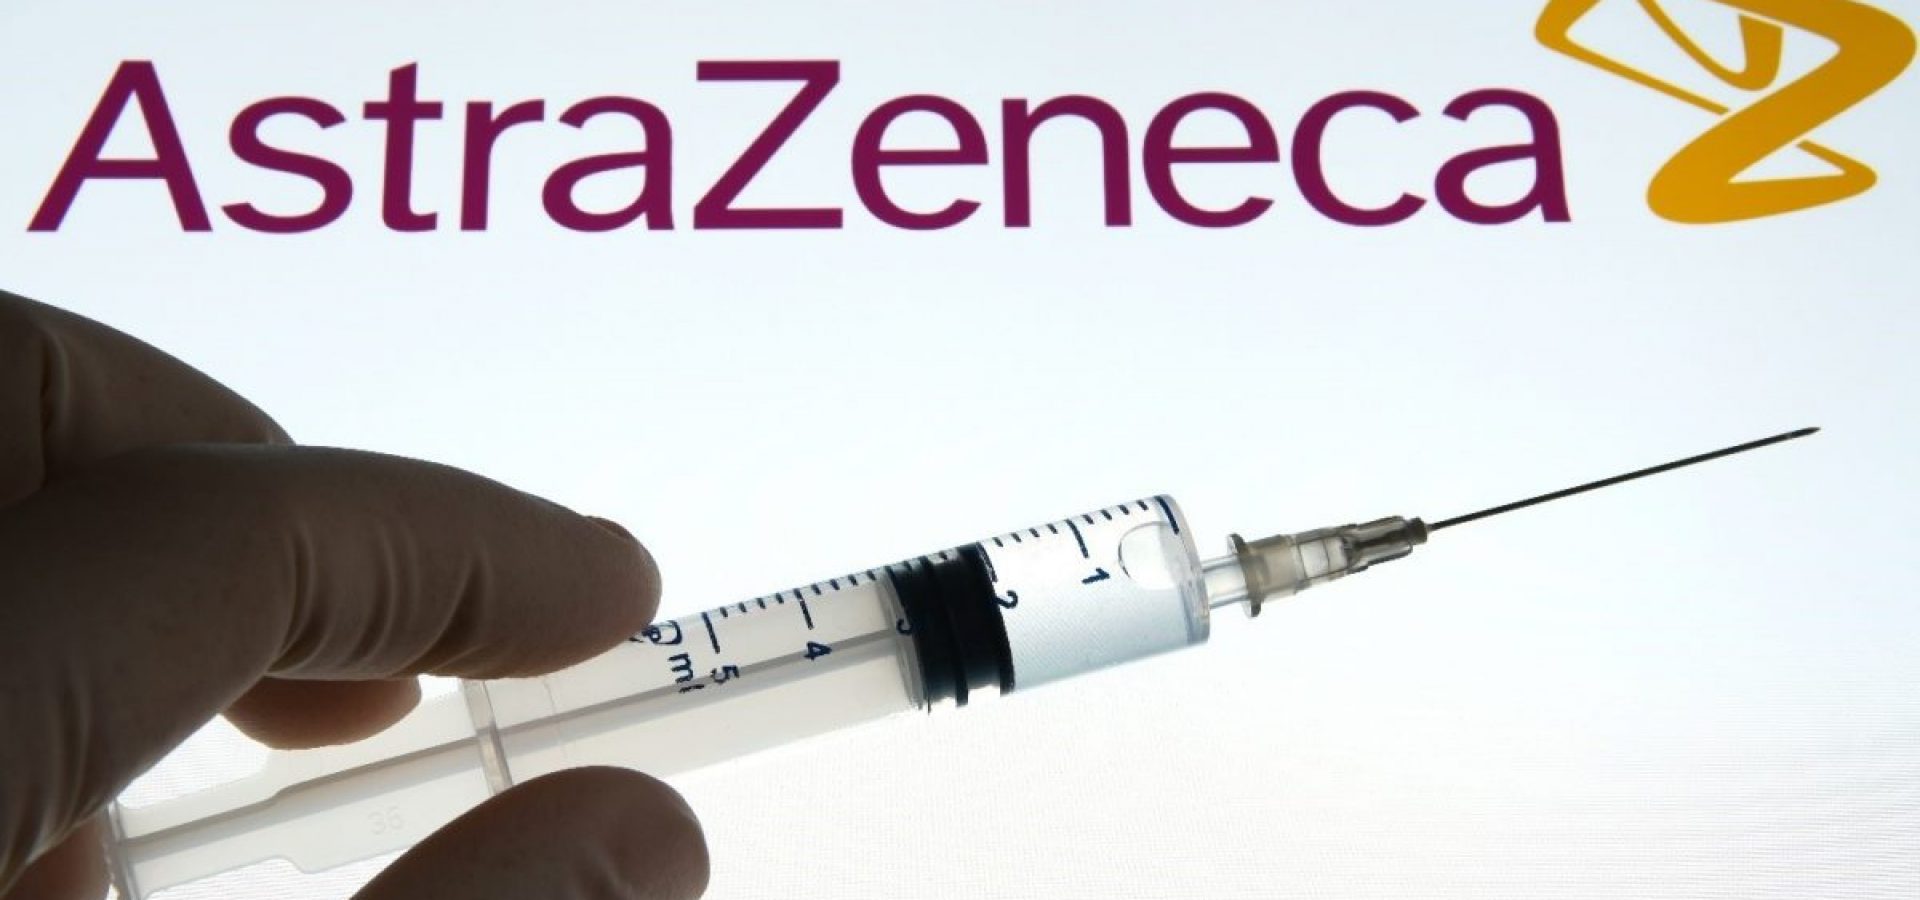 Ireland stopped the use of the AstraZeneca vaccine